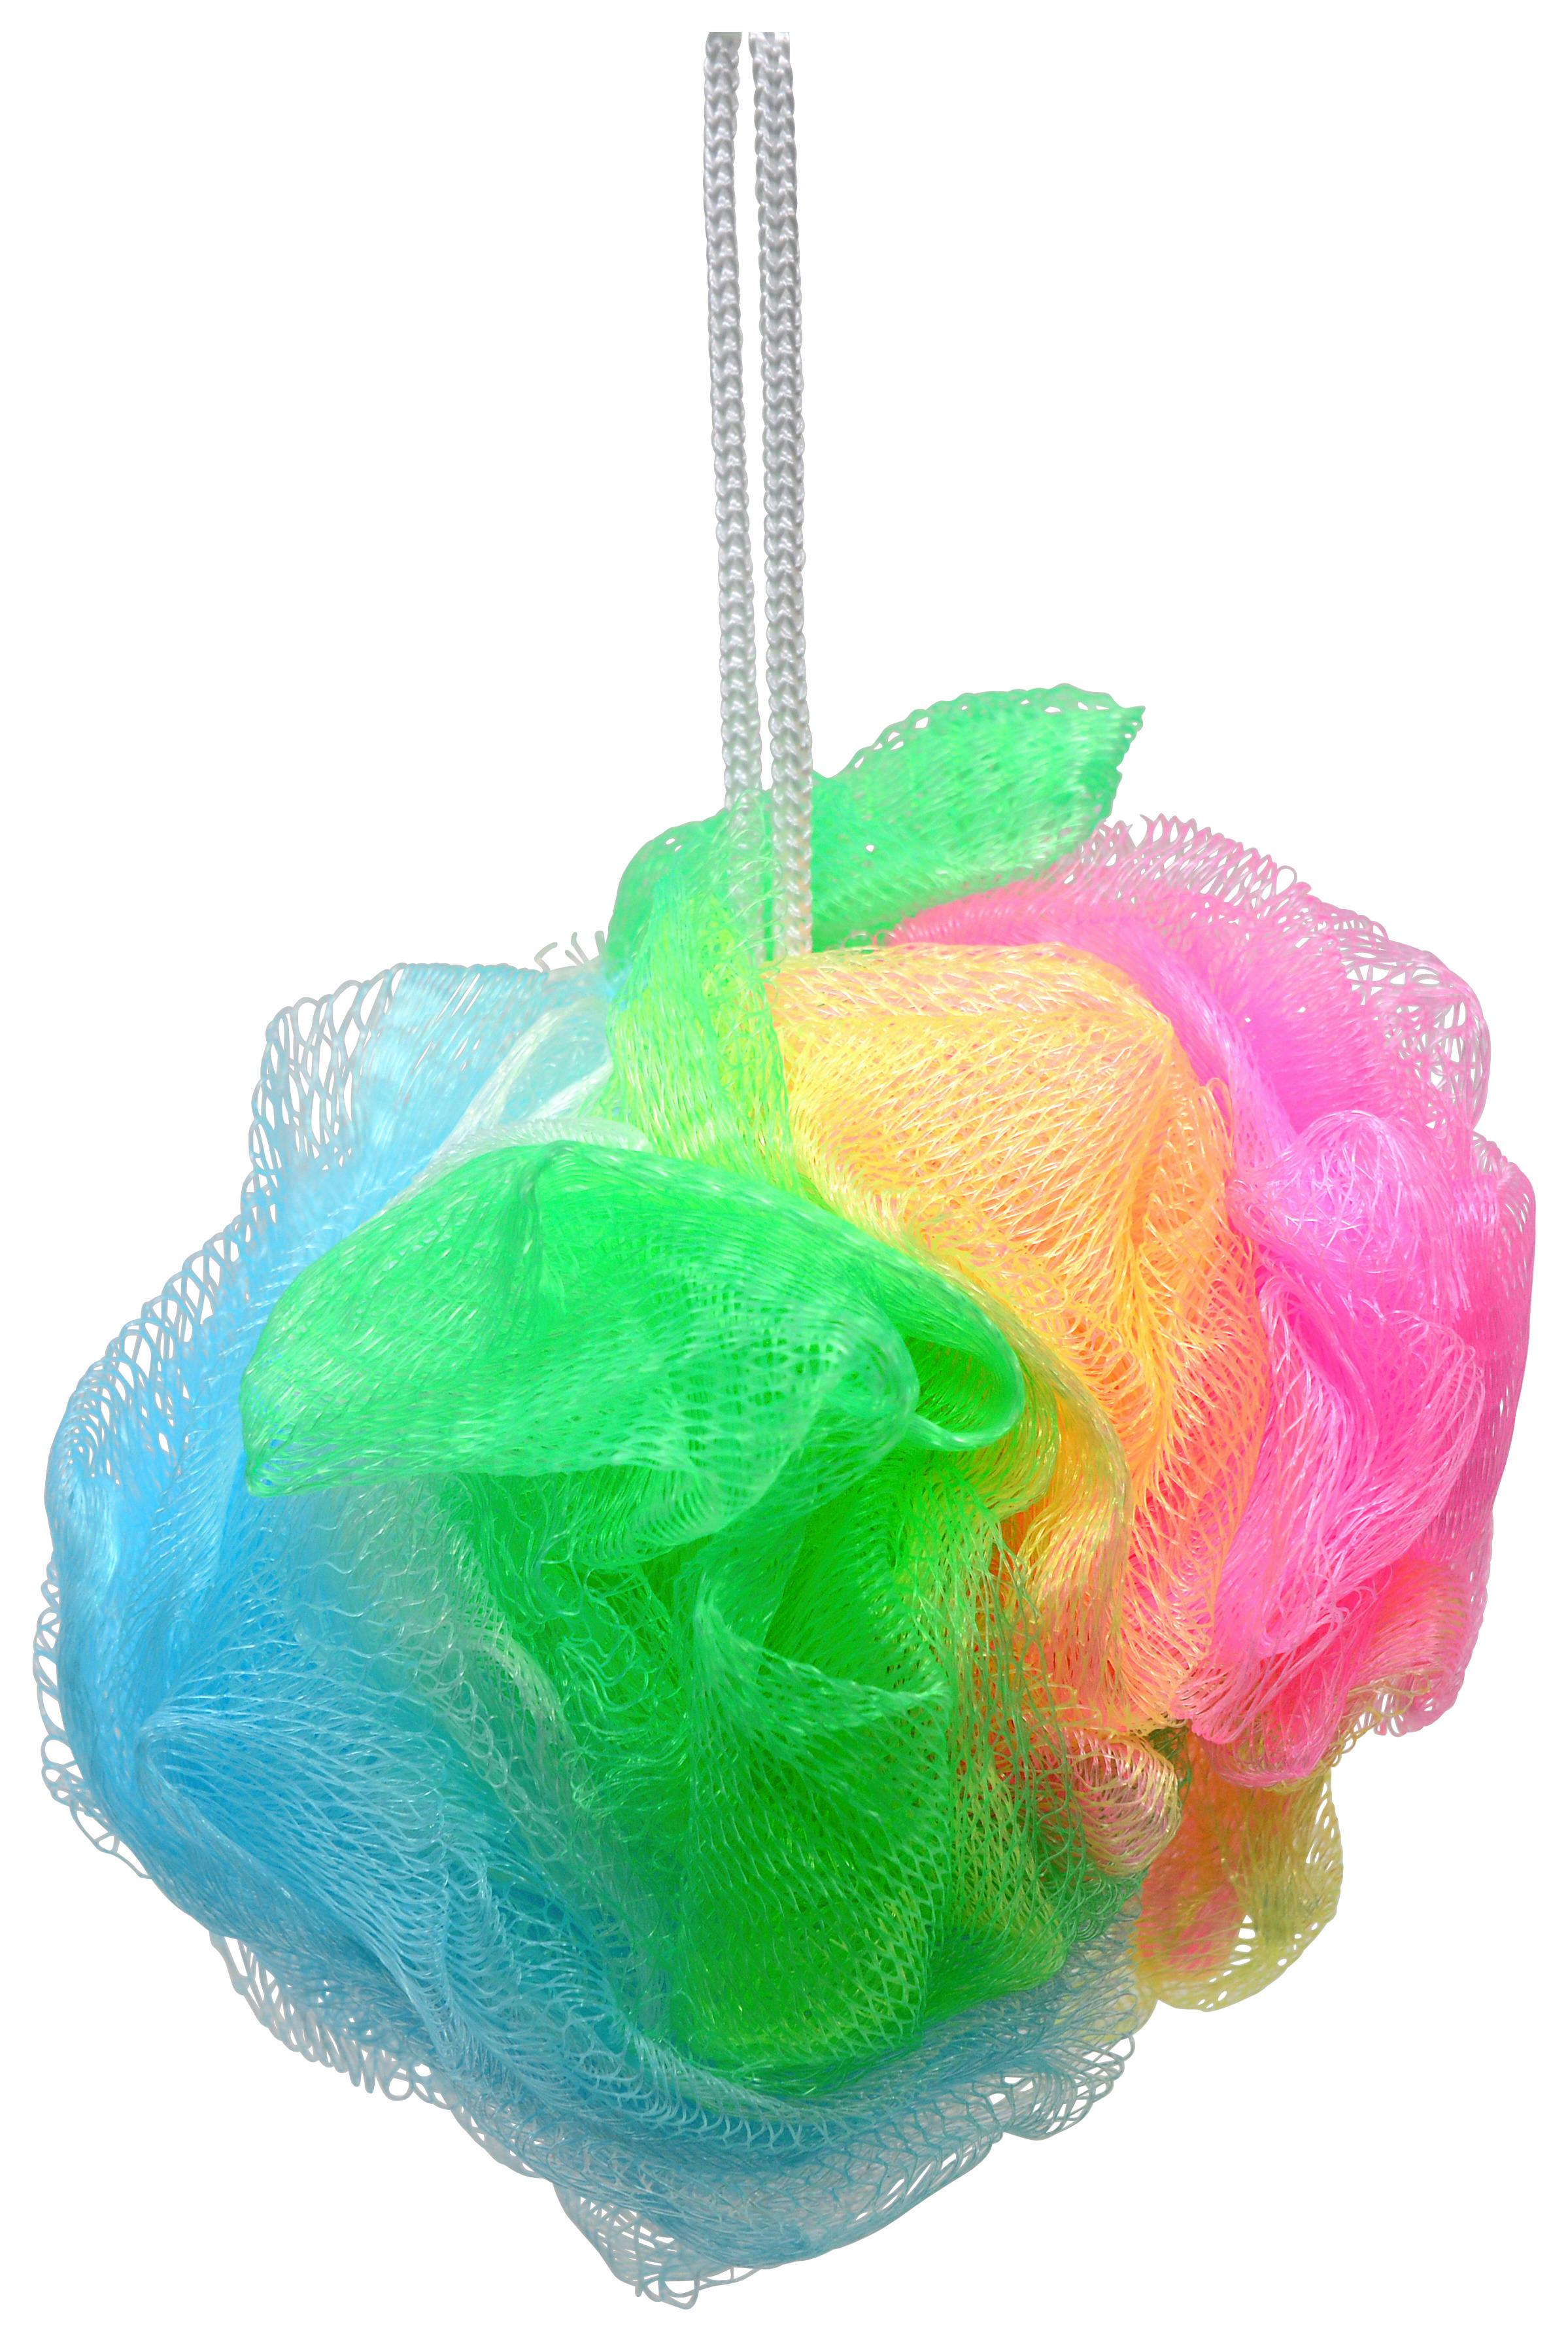 Badeschwamm Finch Kunststoff mit Schlaufe - Multicolor, Kunststoff (15cm)